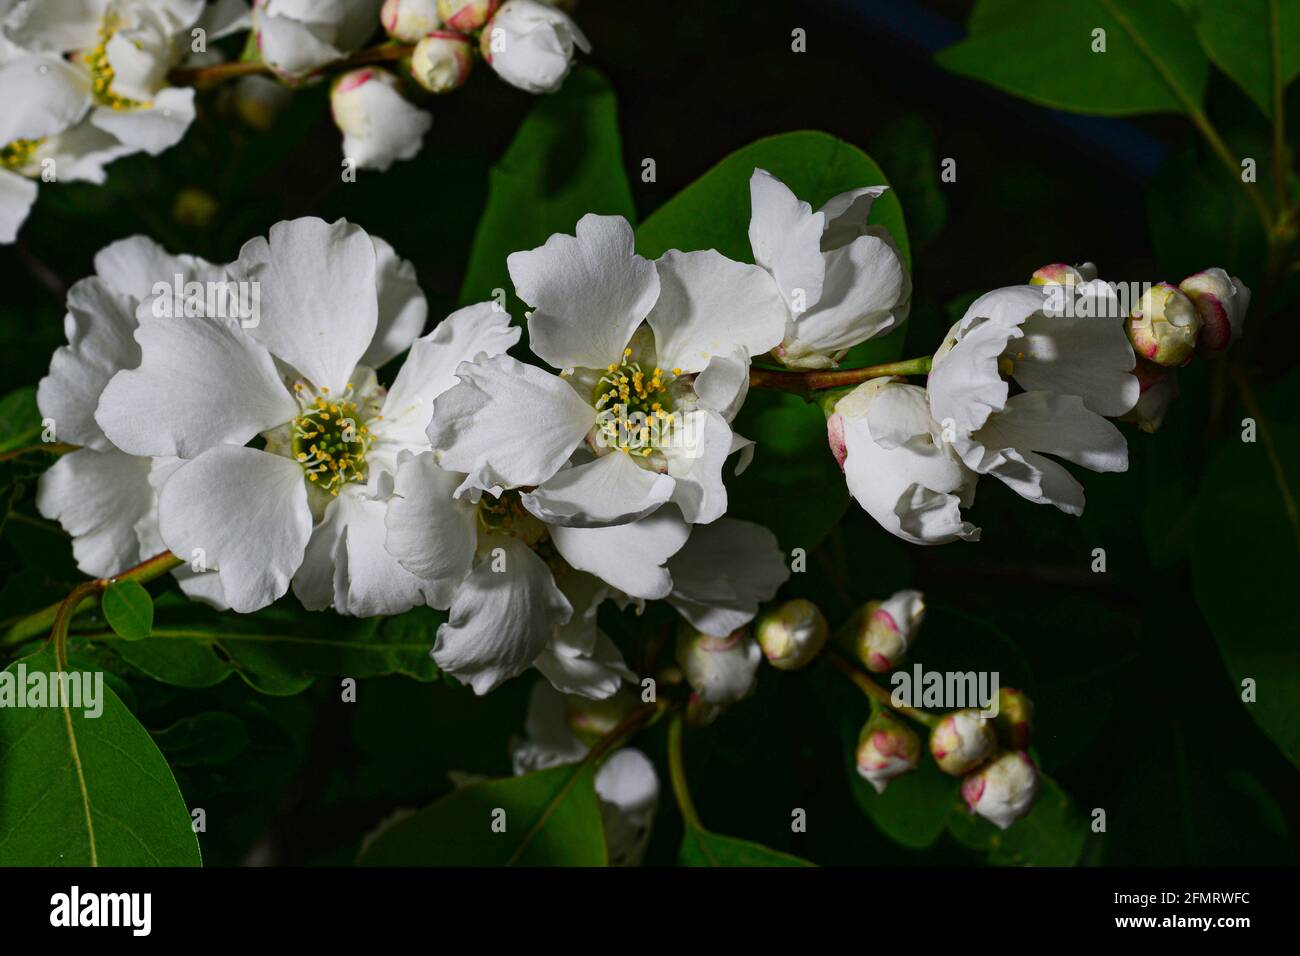 Beautiful bunch of flowers of shrub pearl bush Exochorda Stock Photo